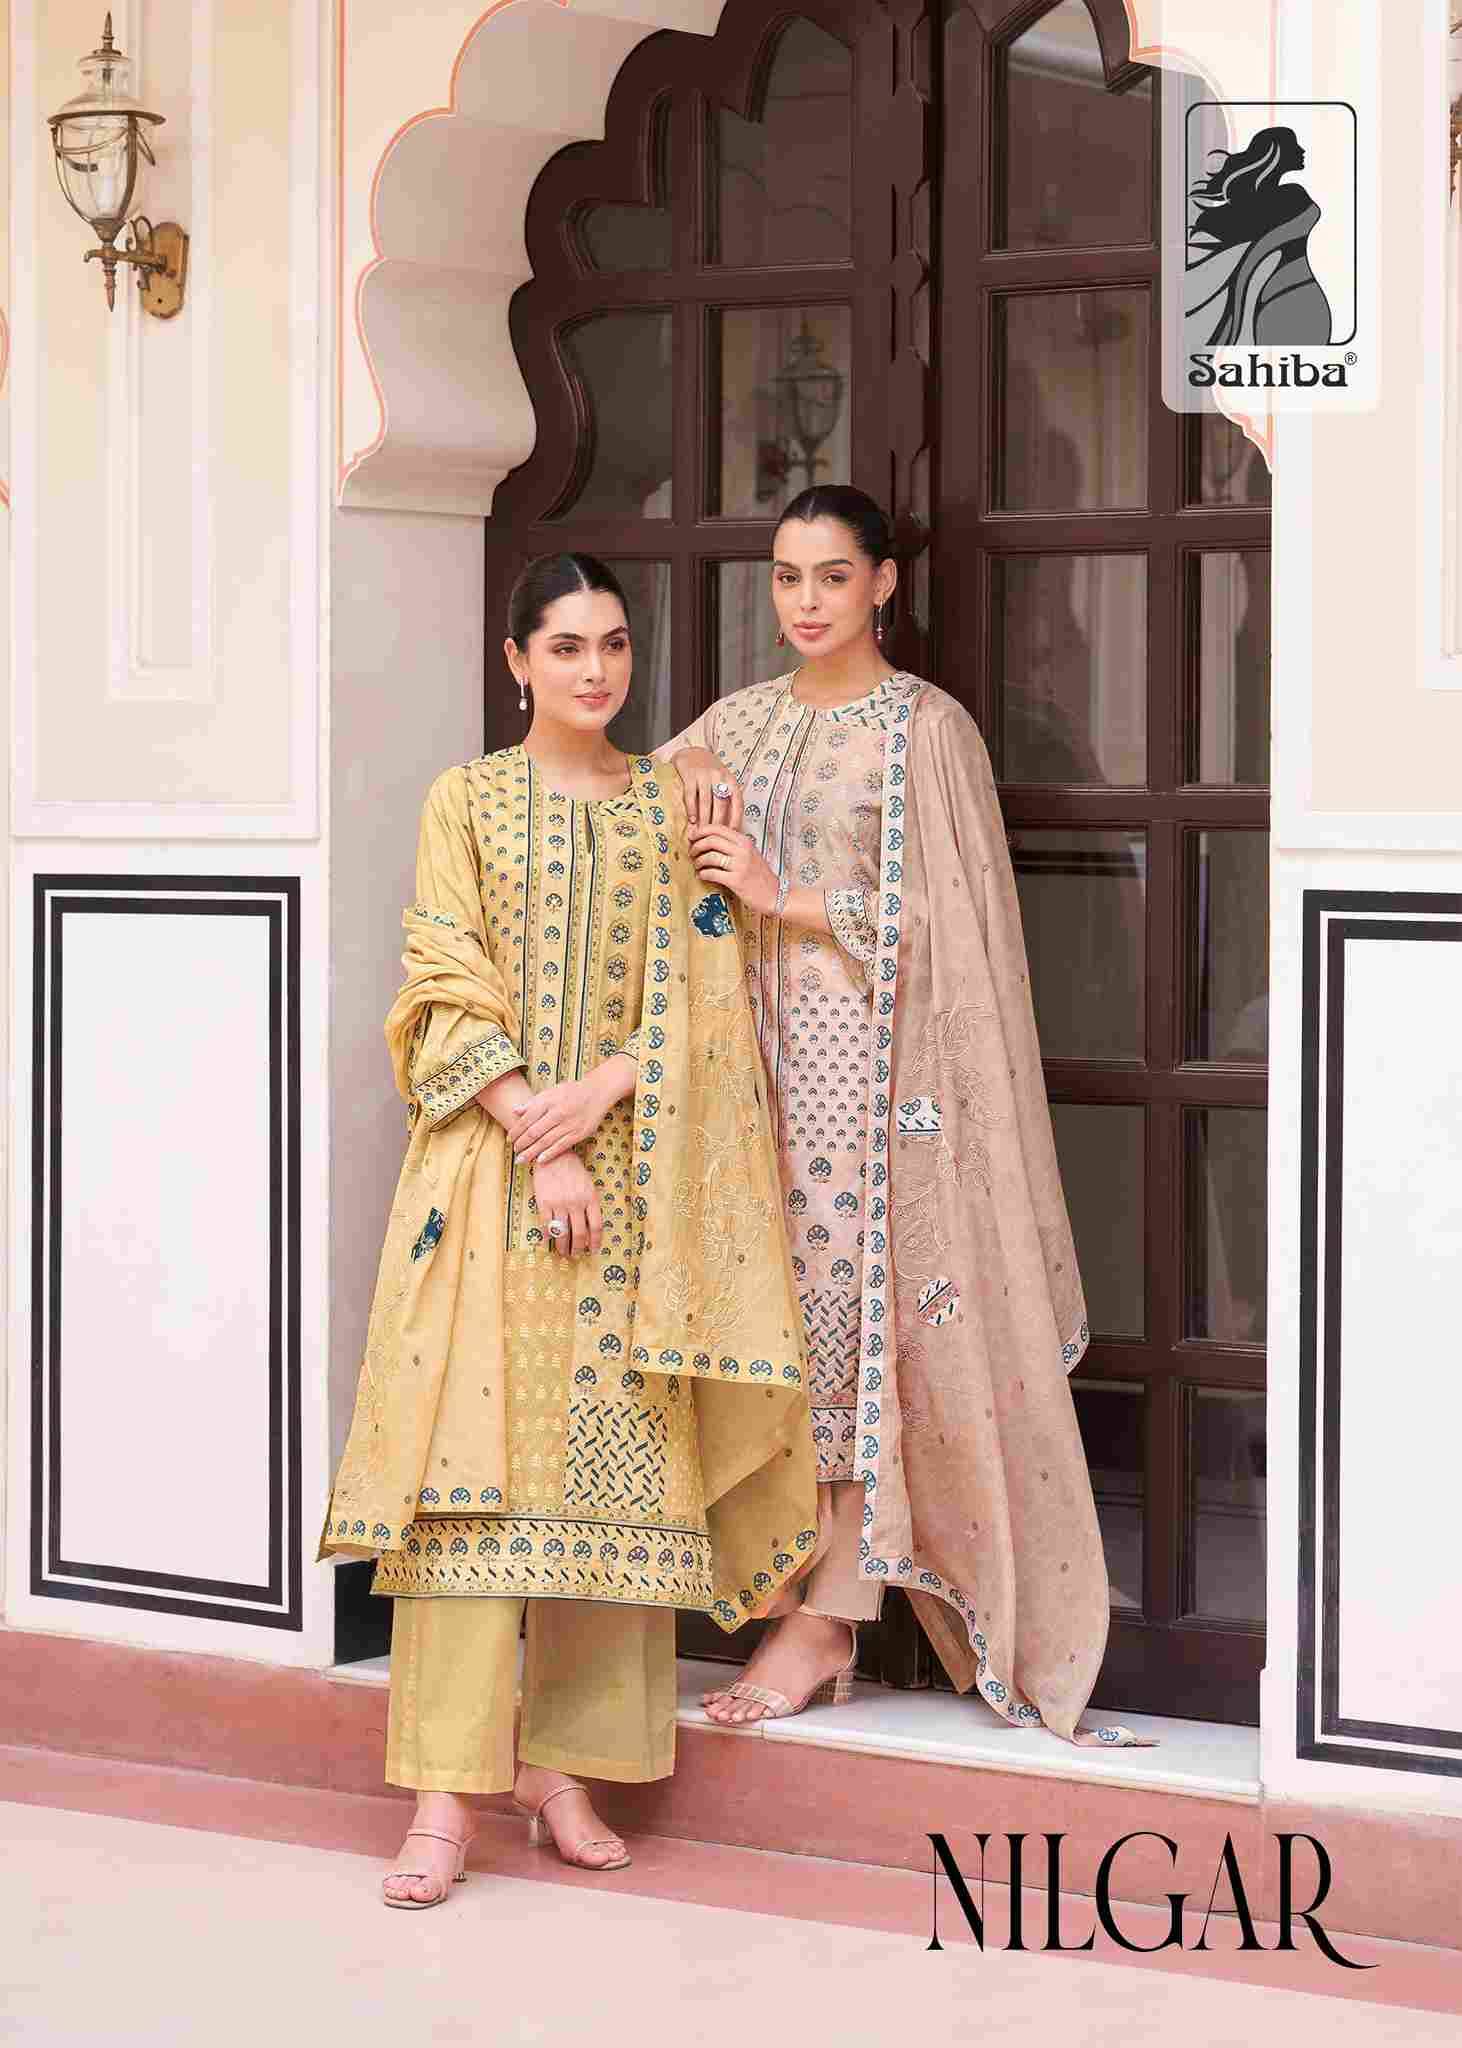 Nilgar By Sahiba Fabrics Beautiful Festive Suits Colorful Stylish Fancy Casual Wear & Ethnic Wear Premium Cotton Lawn Dresses At Wholesale Price